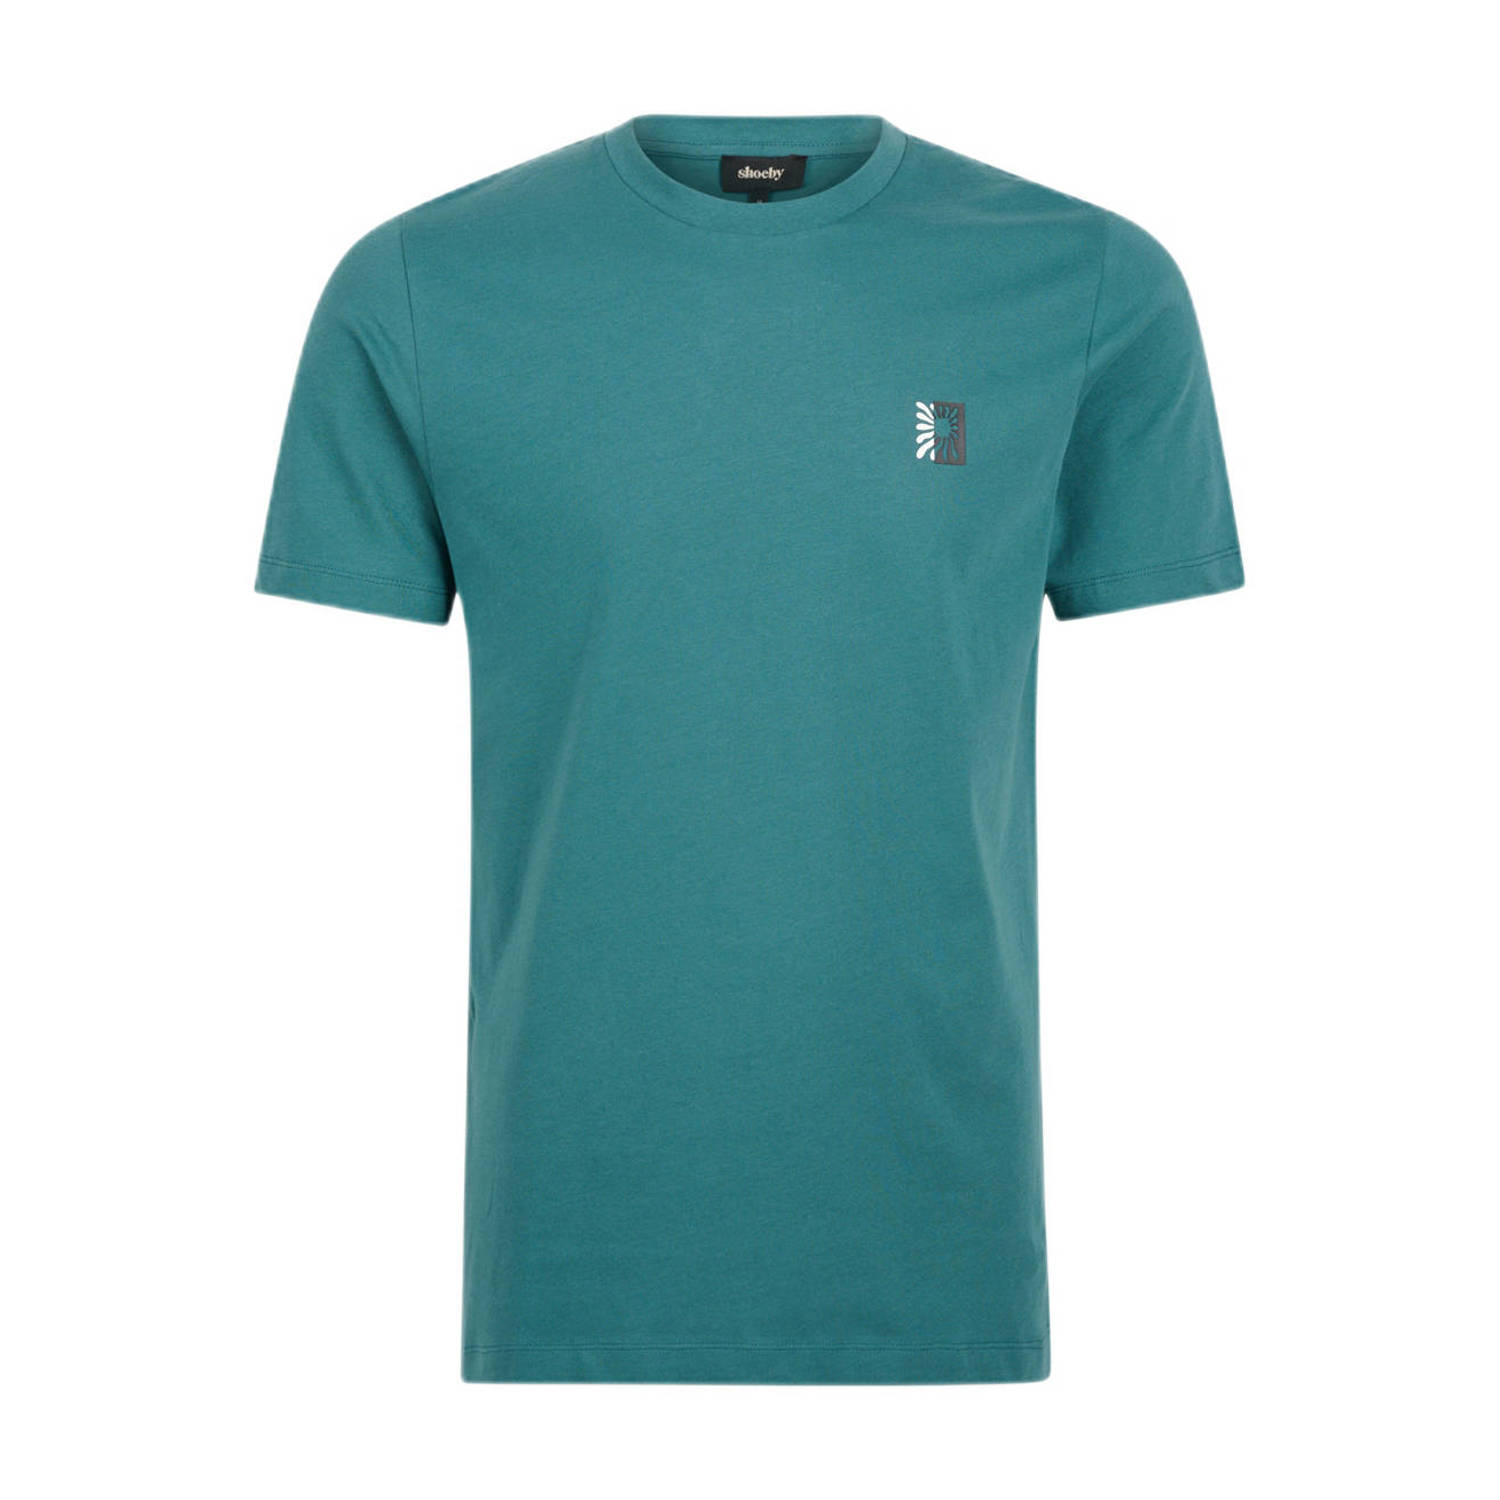 Shoeby T-shirt \\ met printopdruk turquoise